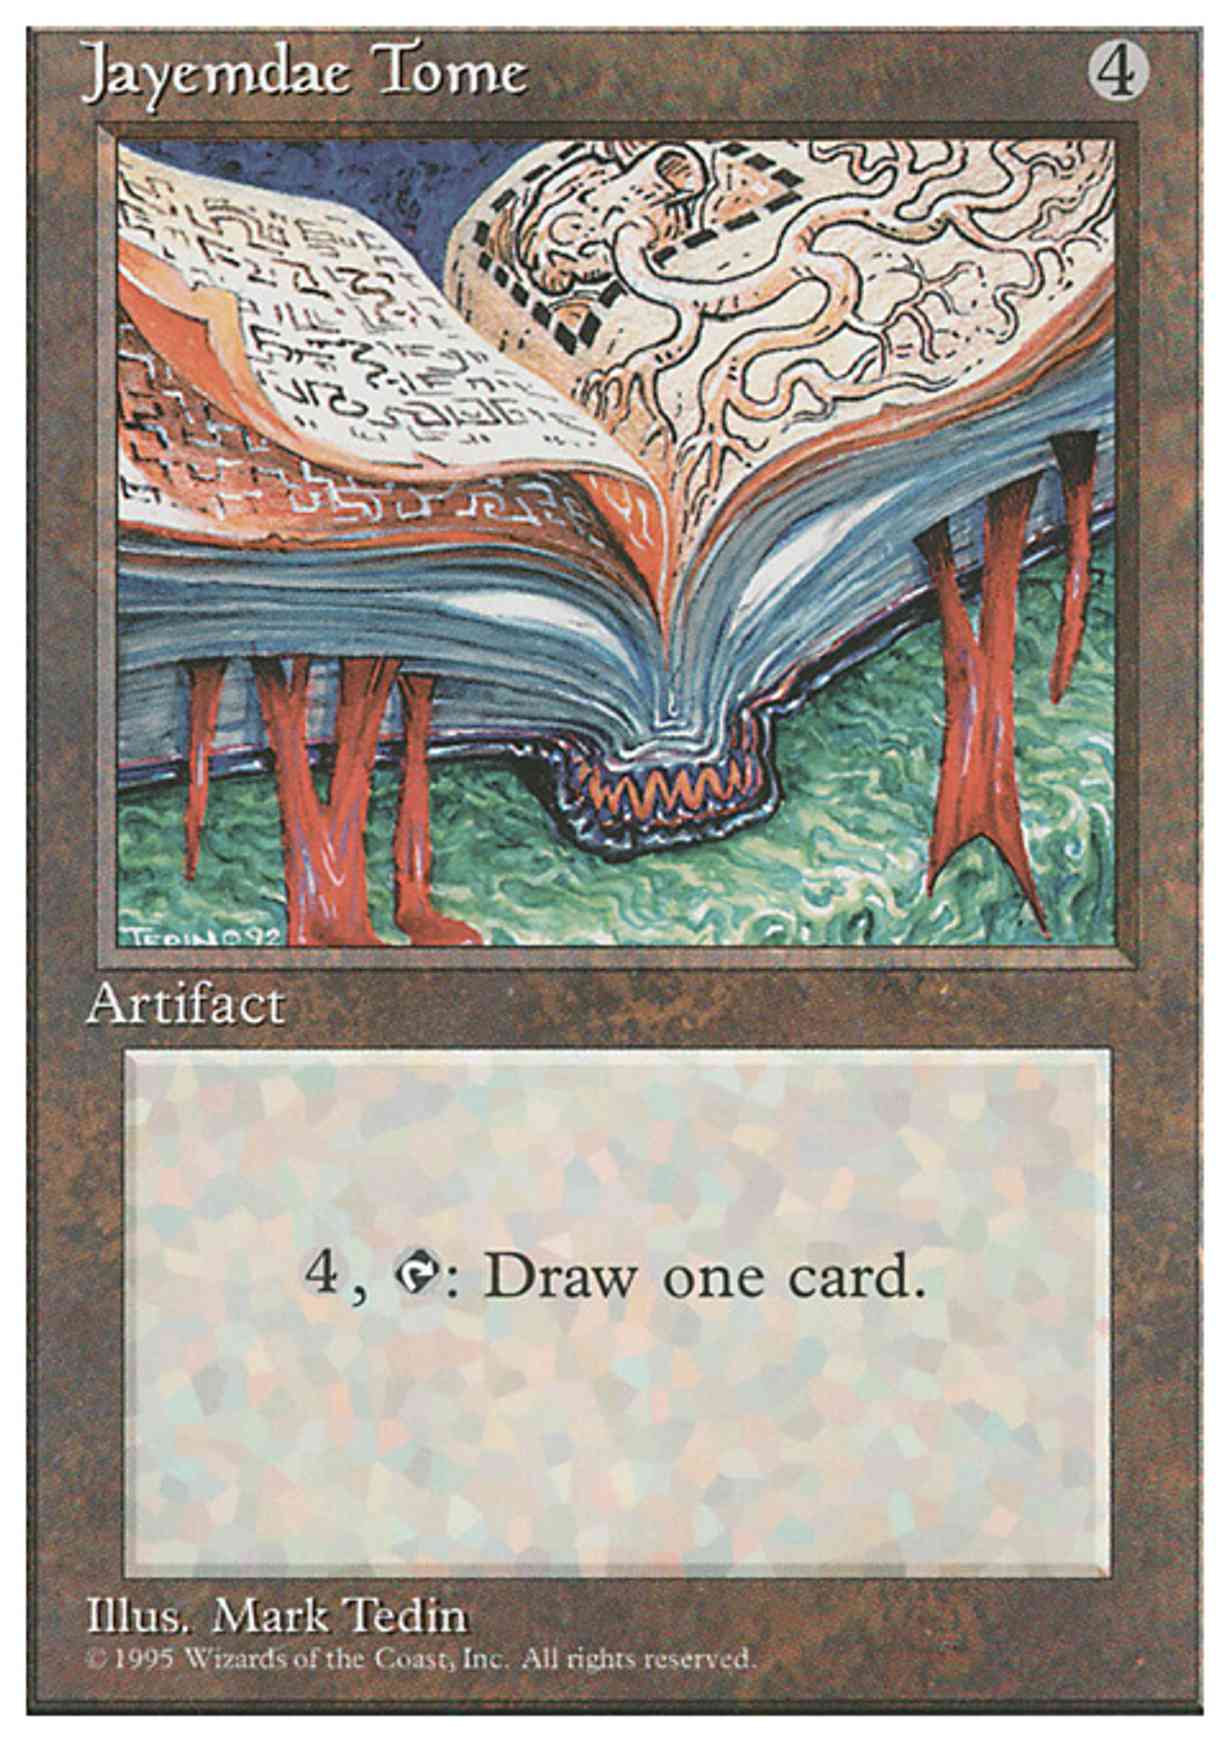 Jayemdae Tome magic card front